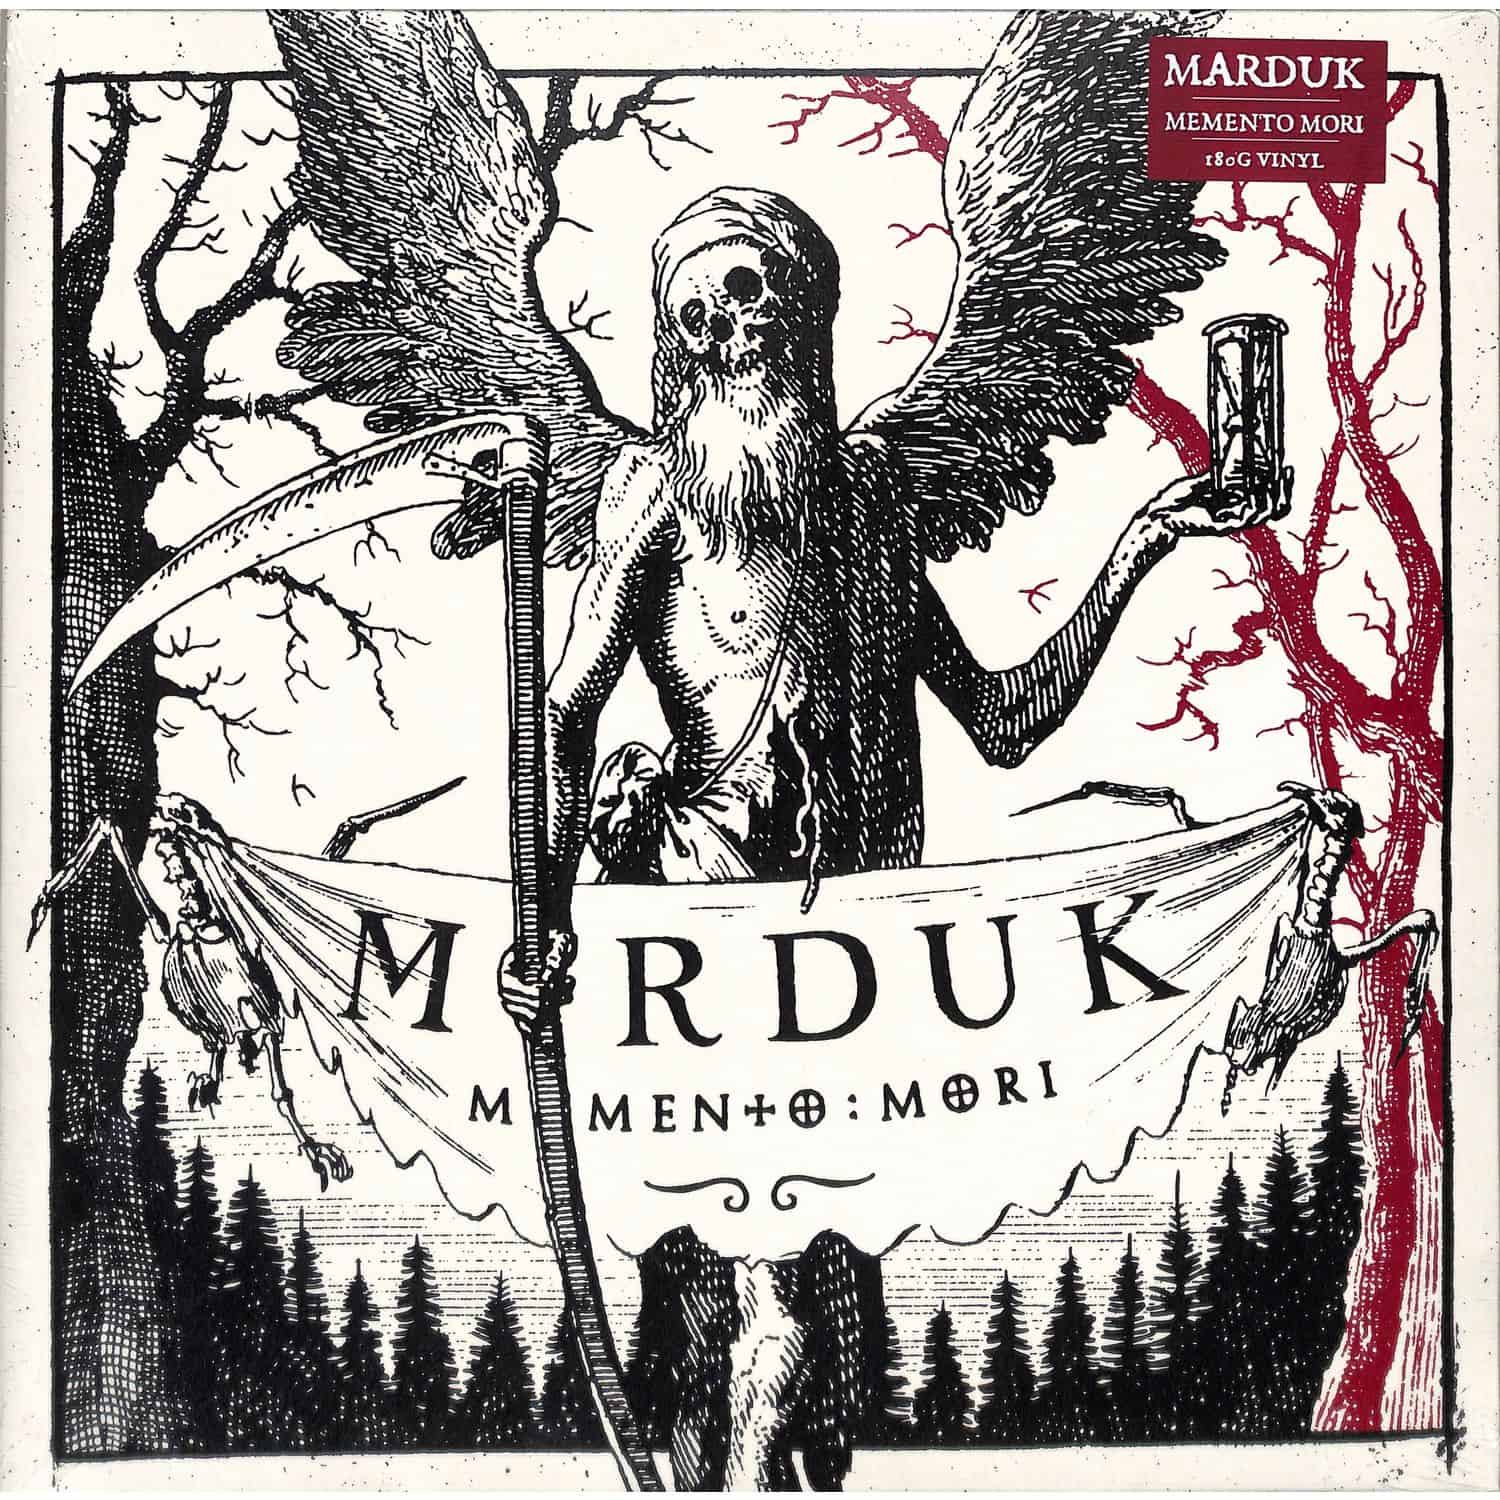 Marduk - MEMENTO MORI 